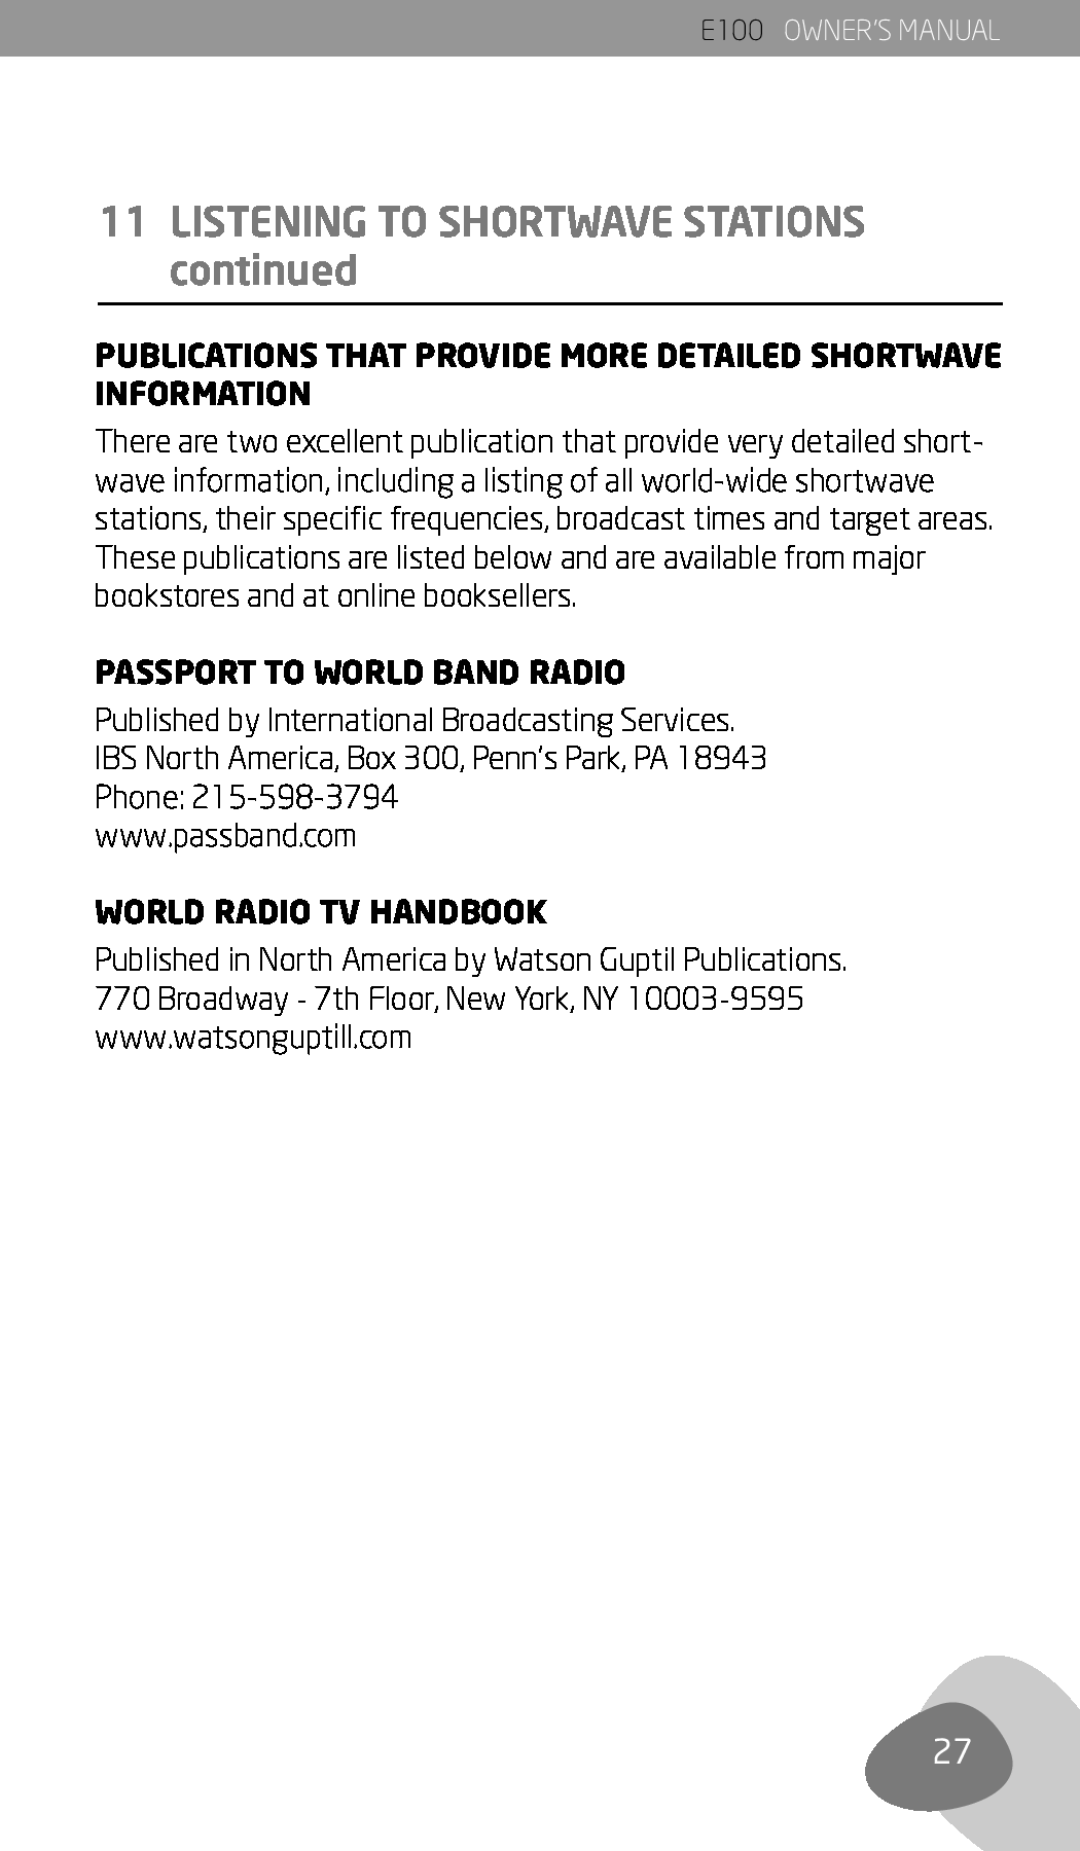 Eton E100 owner manual Passport To World Band Radio, World Radio Tv Handbook, 11LISTENING TO SHORTWAVE STATIONS continued 